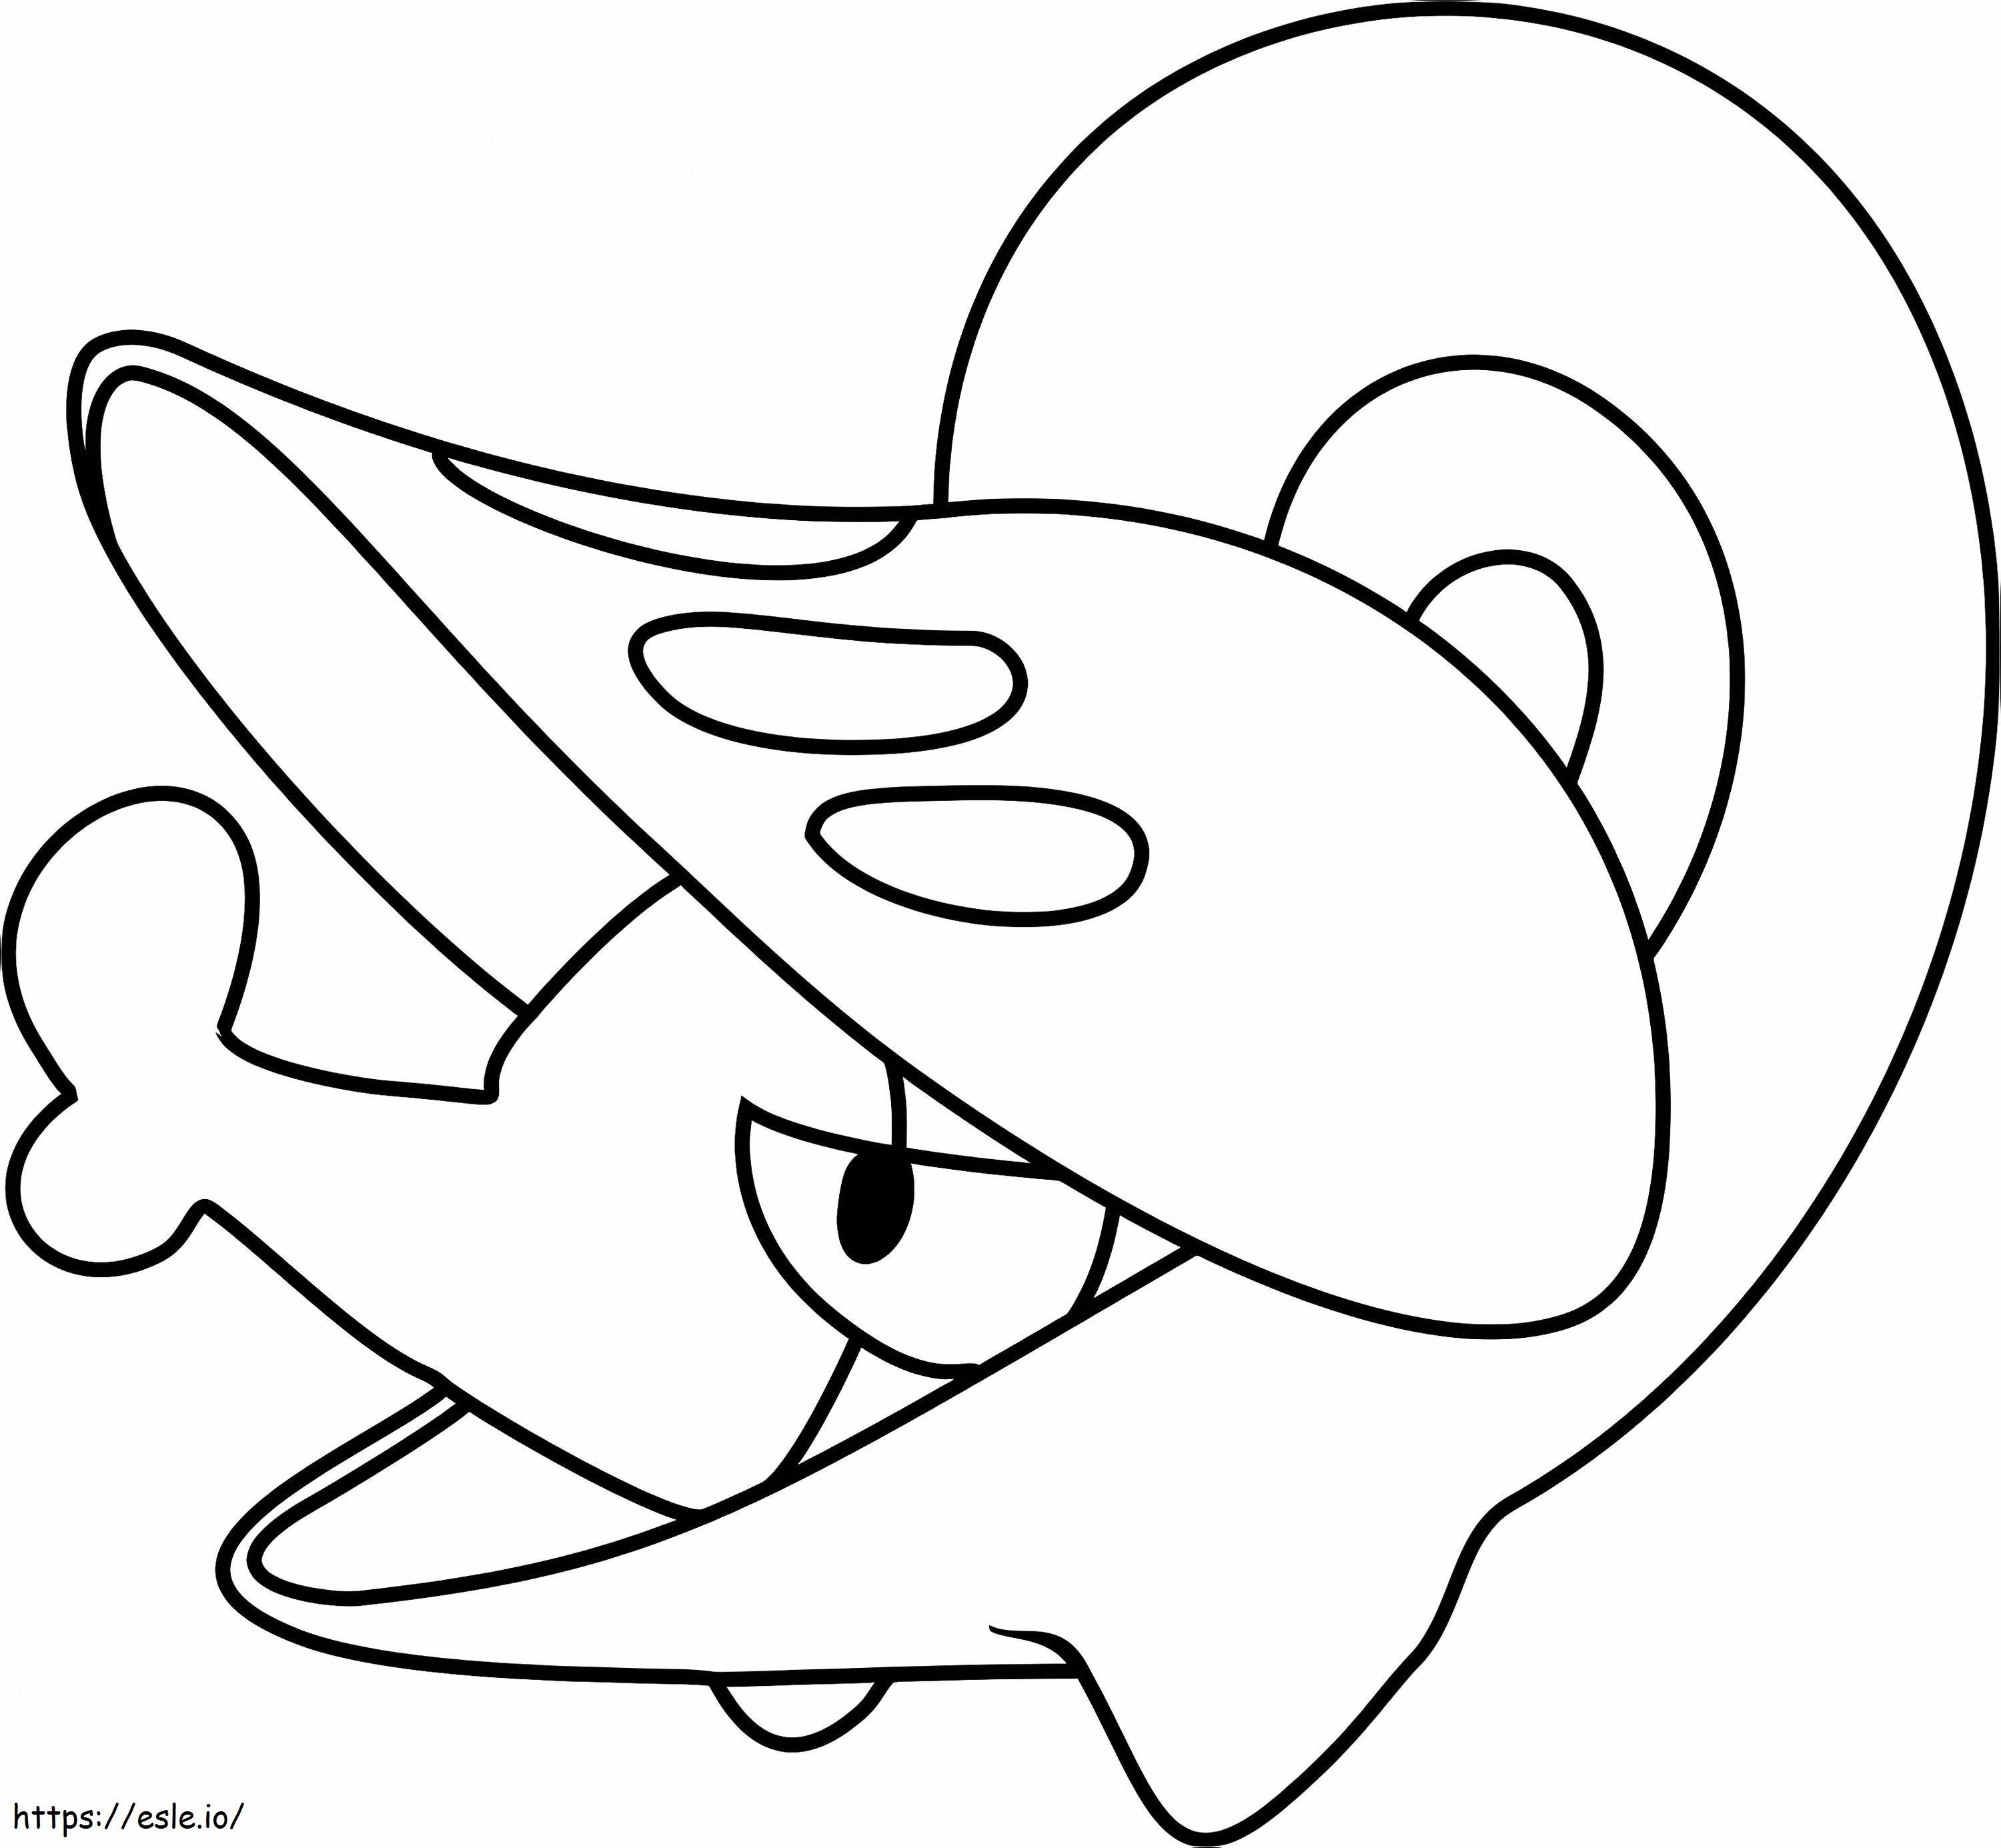  Casca Pokemon1 de colorat